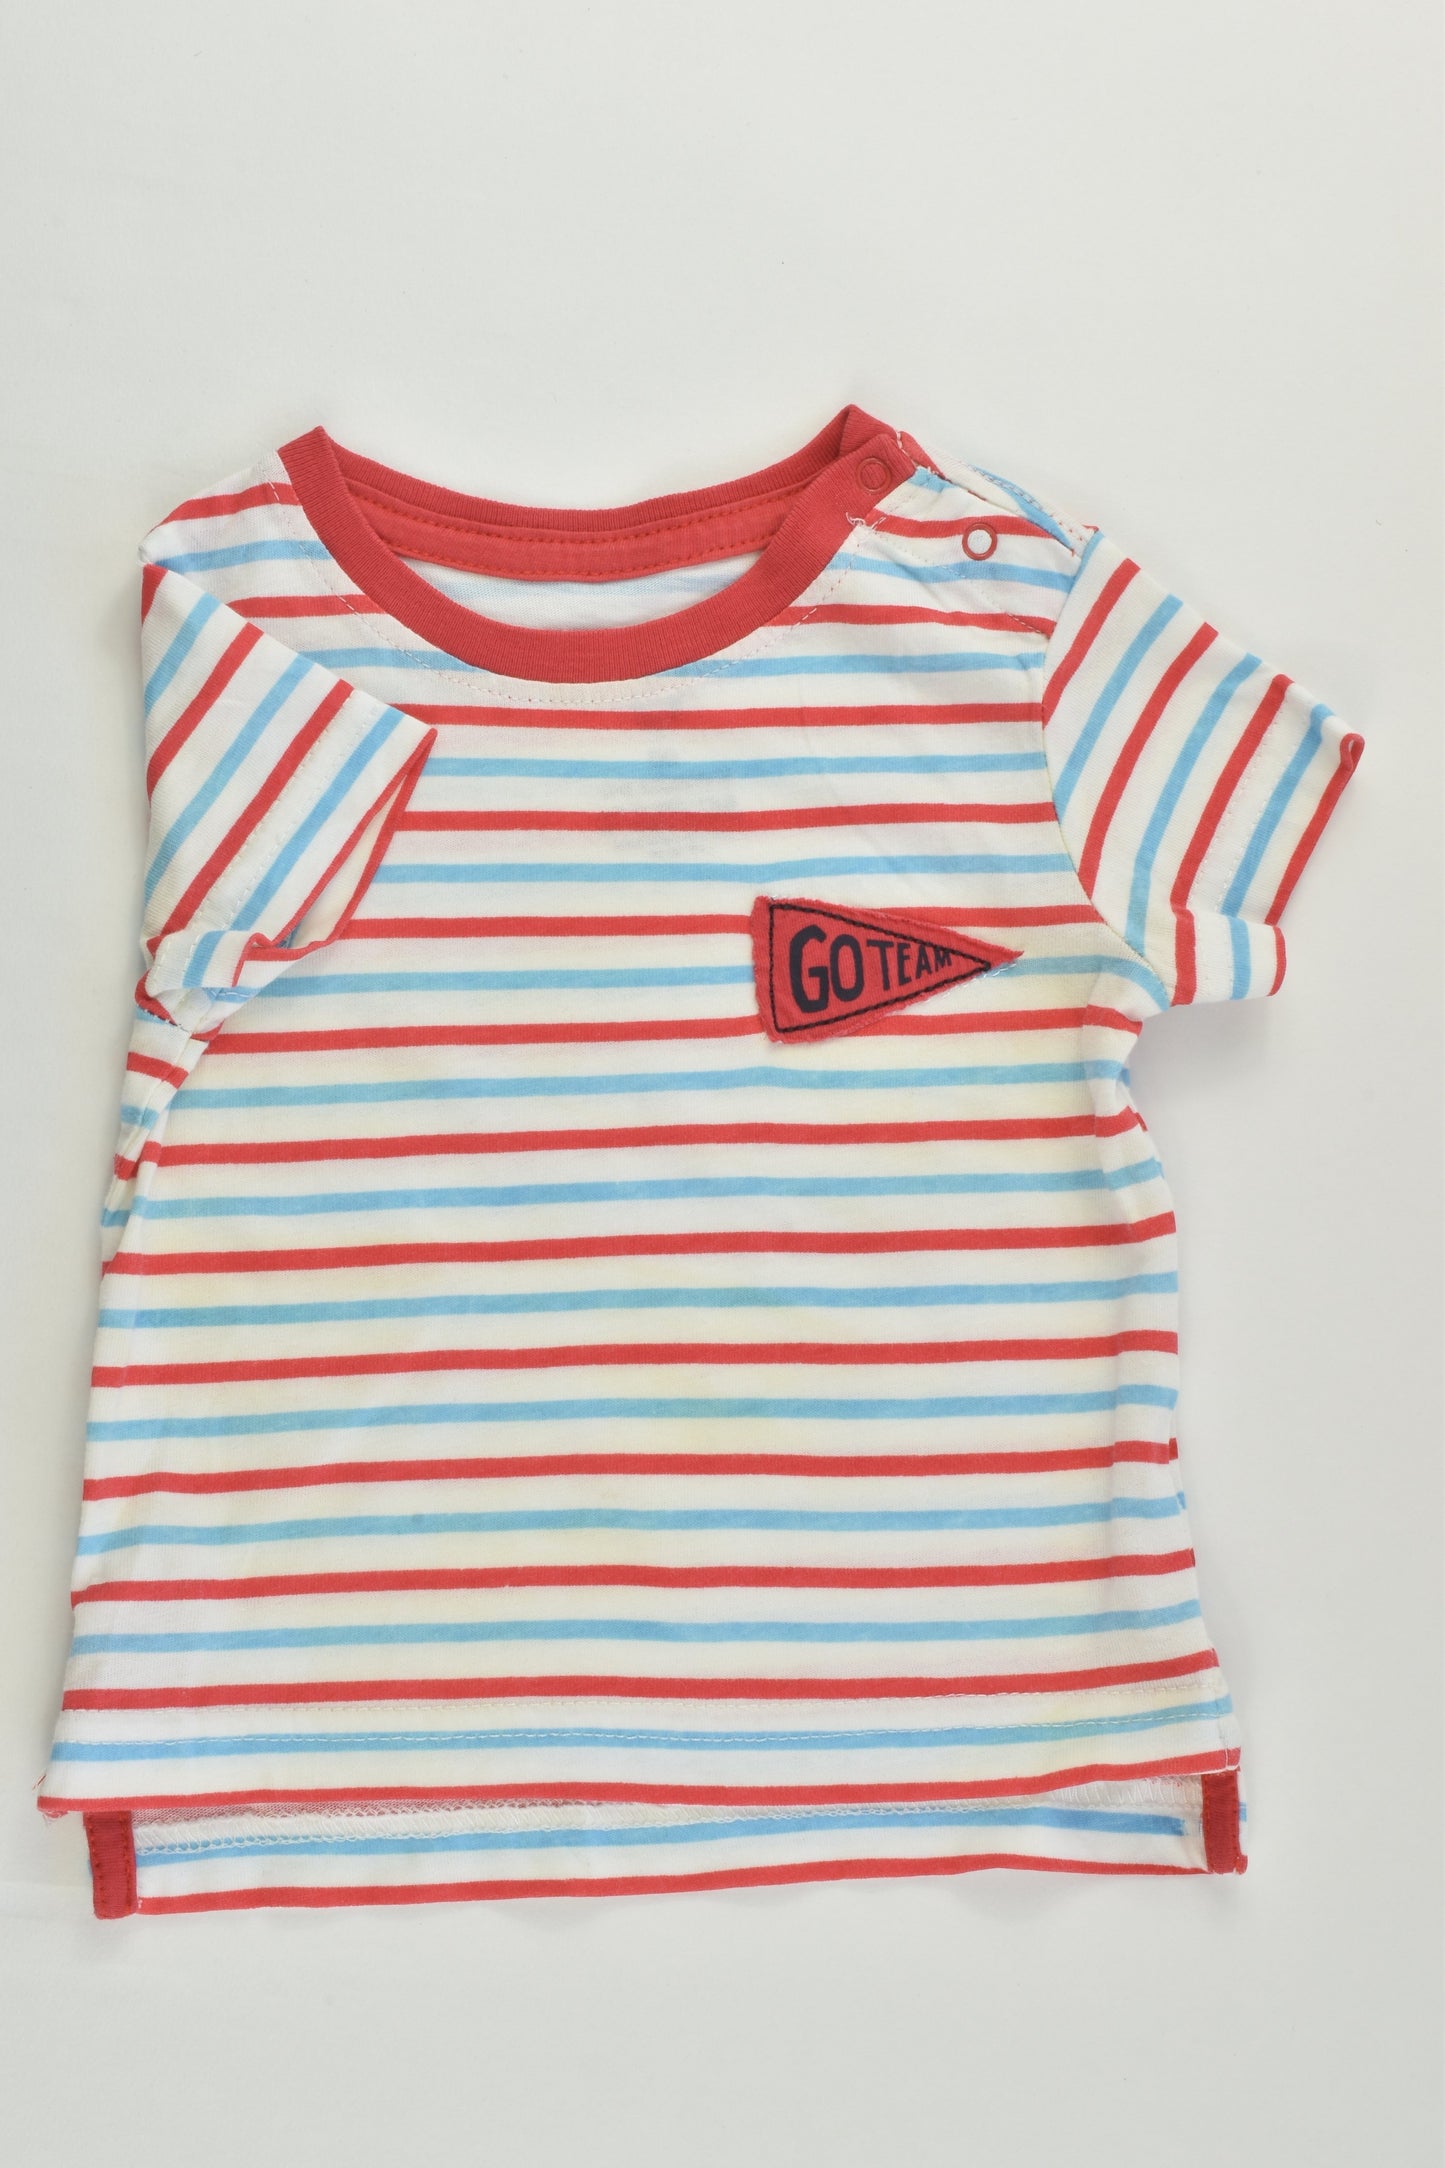 Cotton On Baby Size 00 (3-6 months) 'Go Team' T-shirt